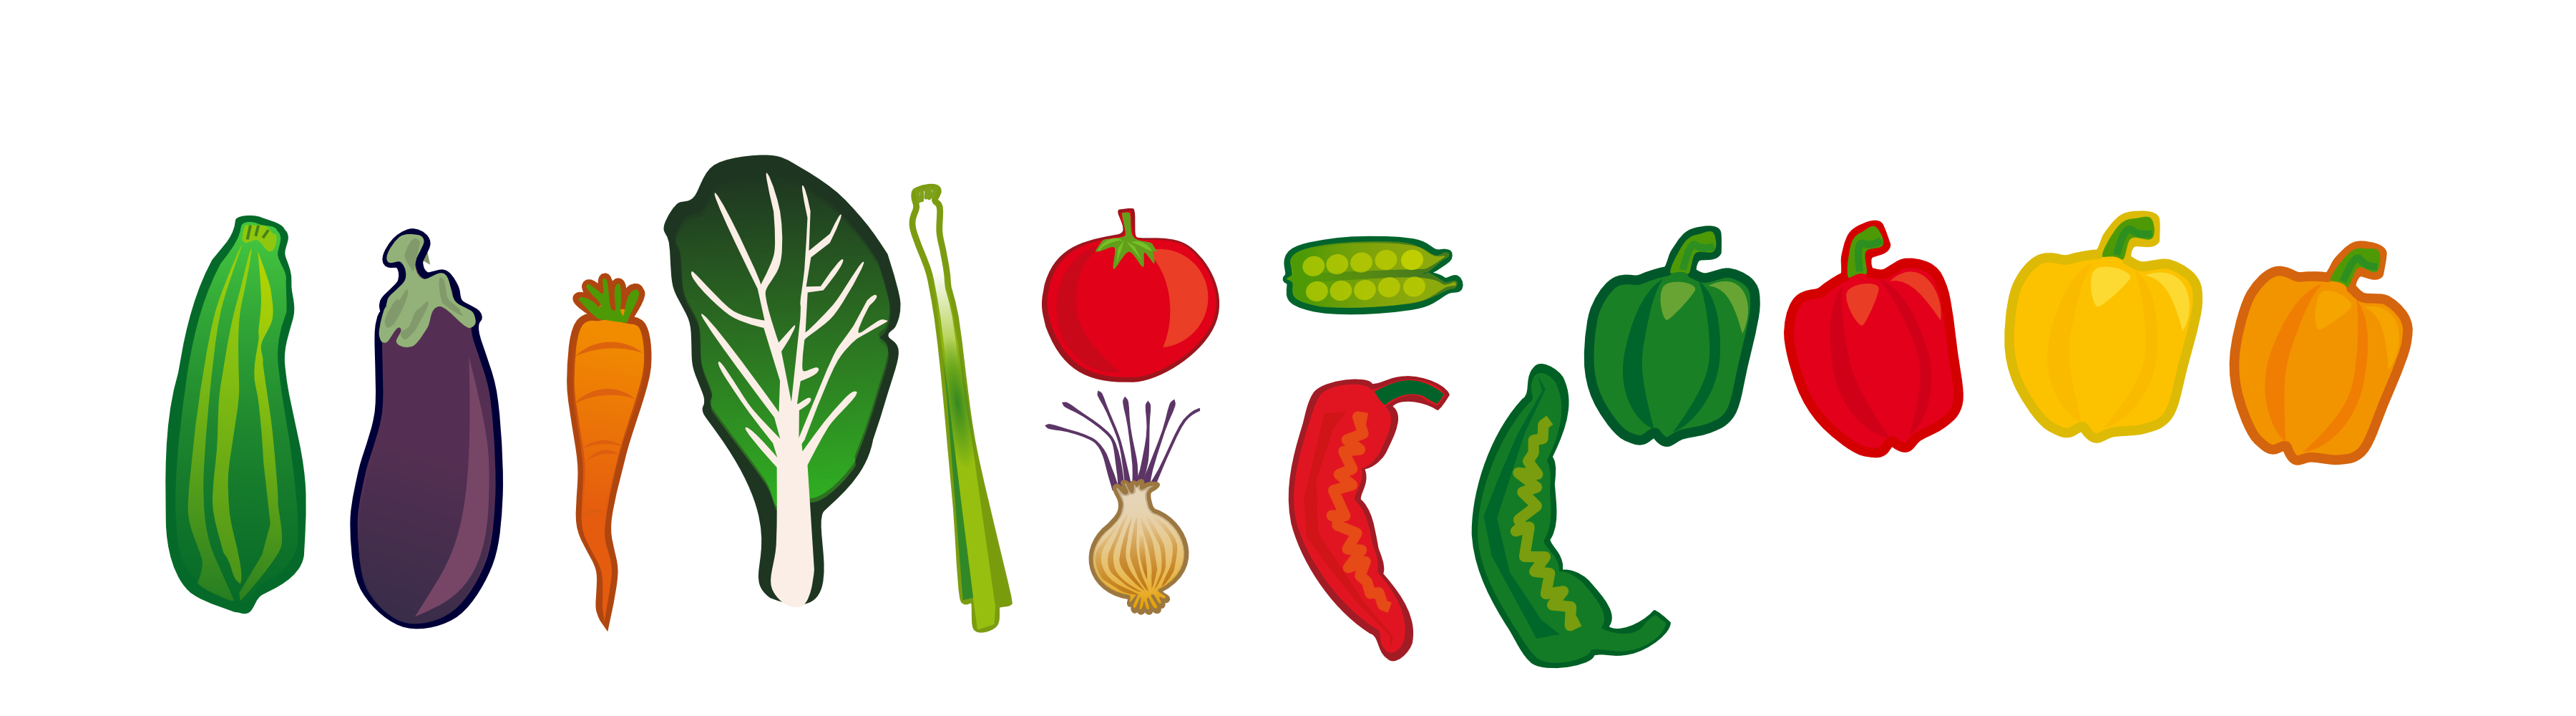 Vegetables Png Image Clipart